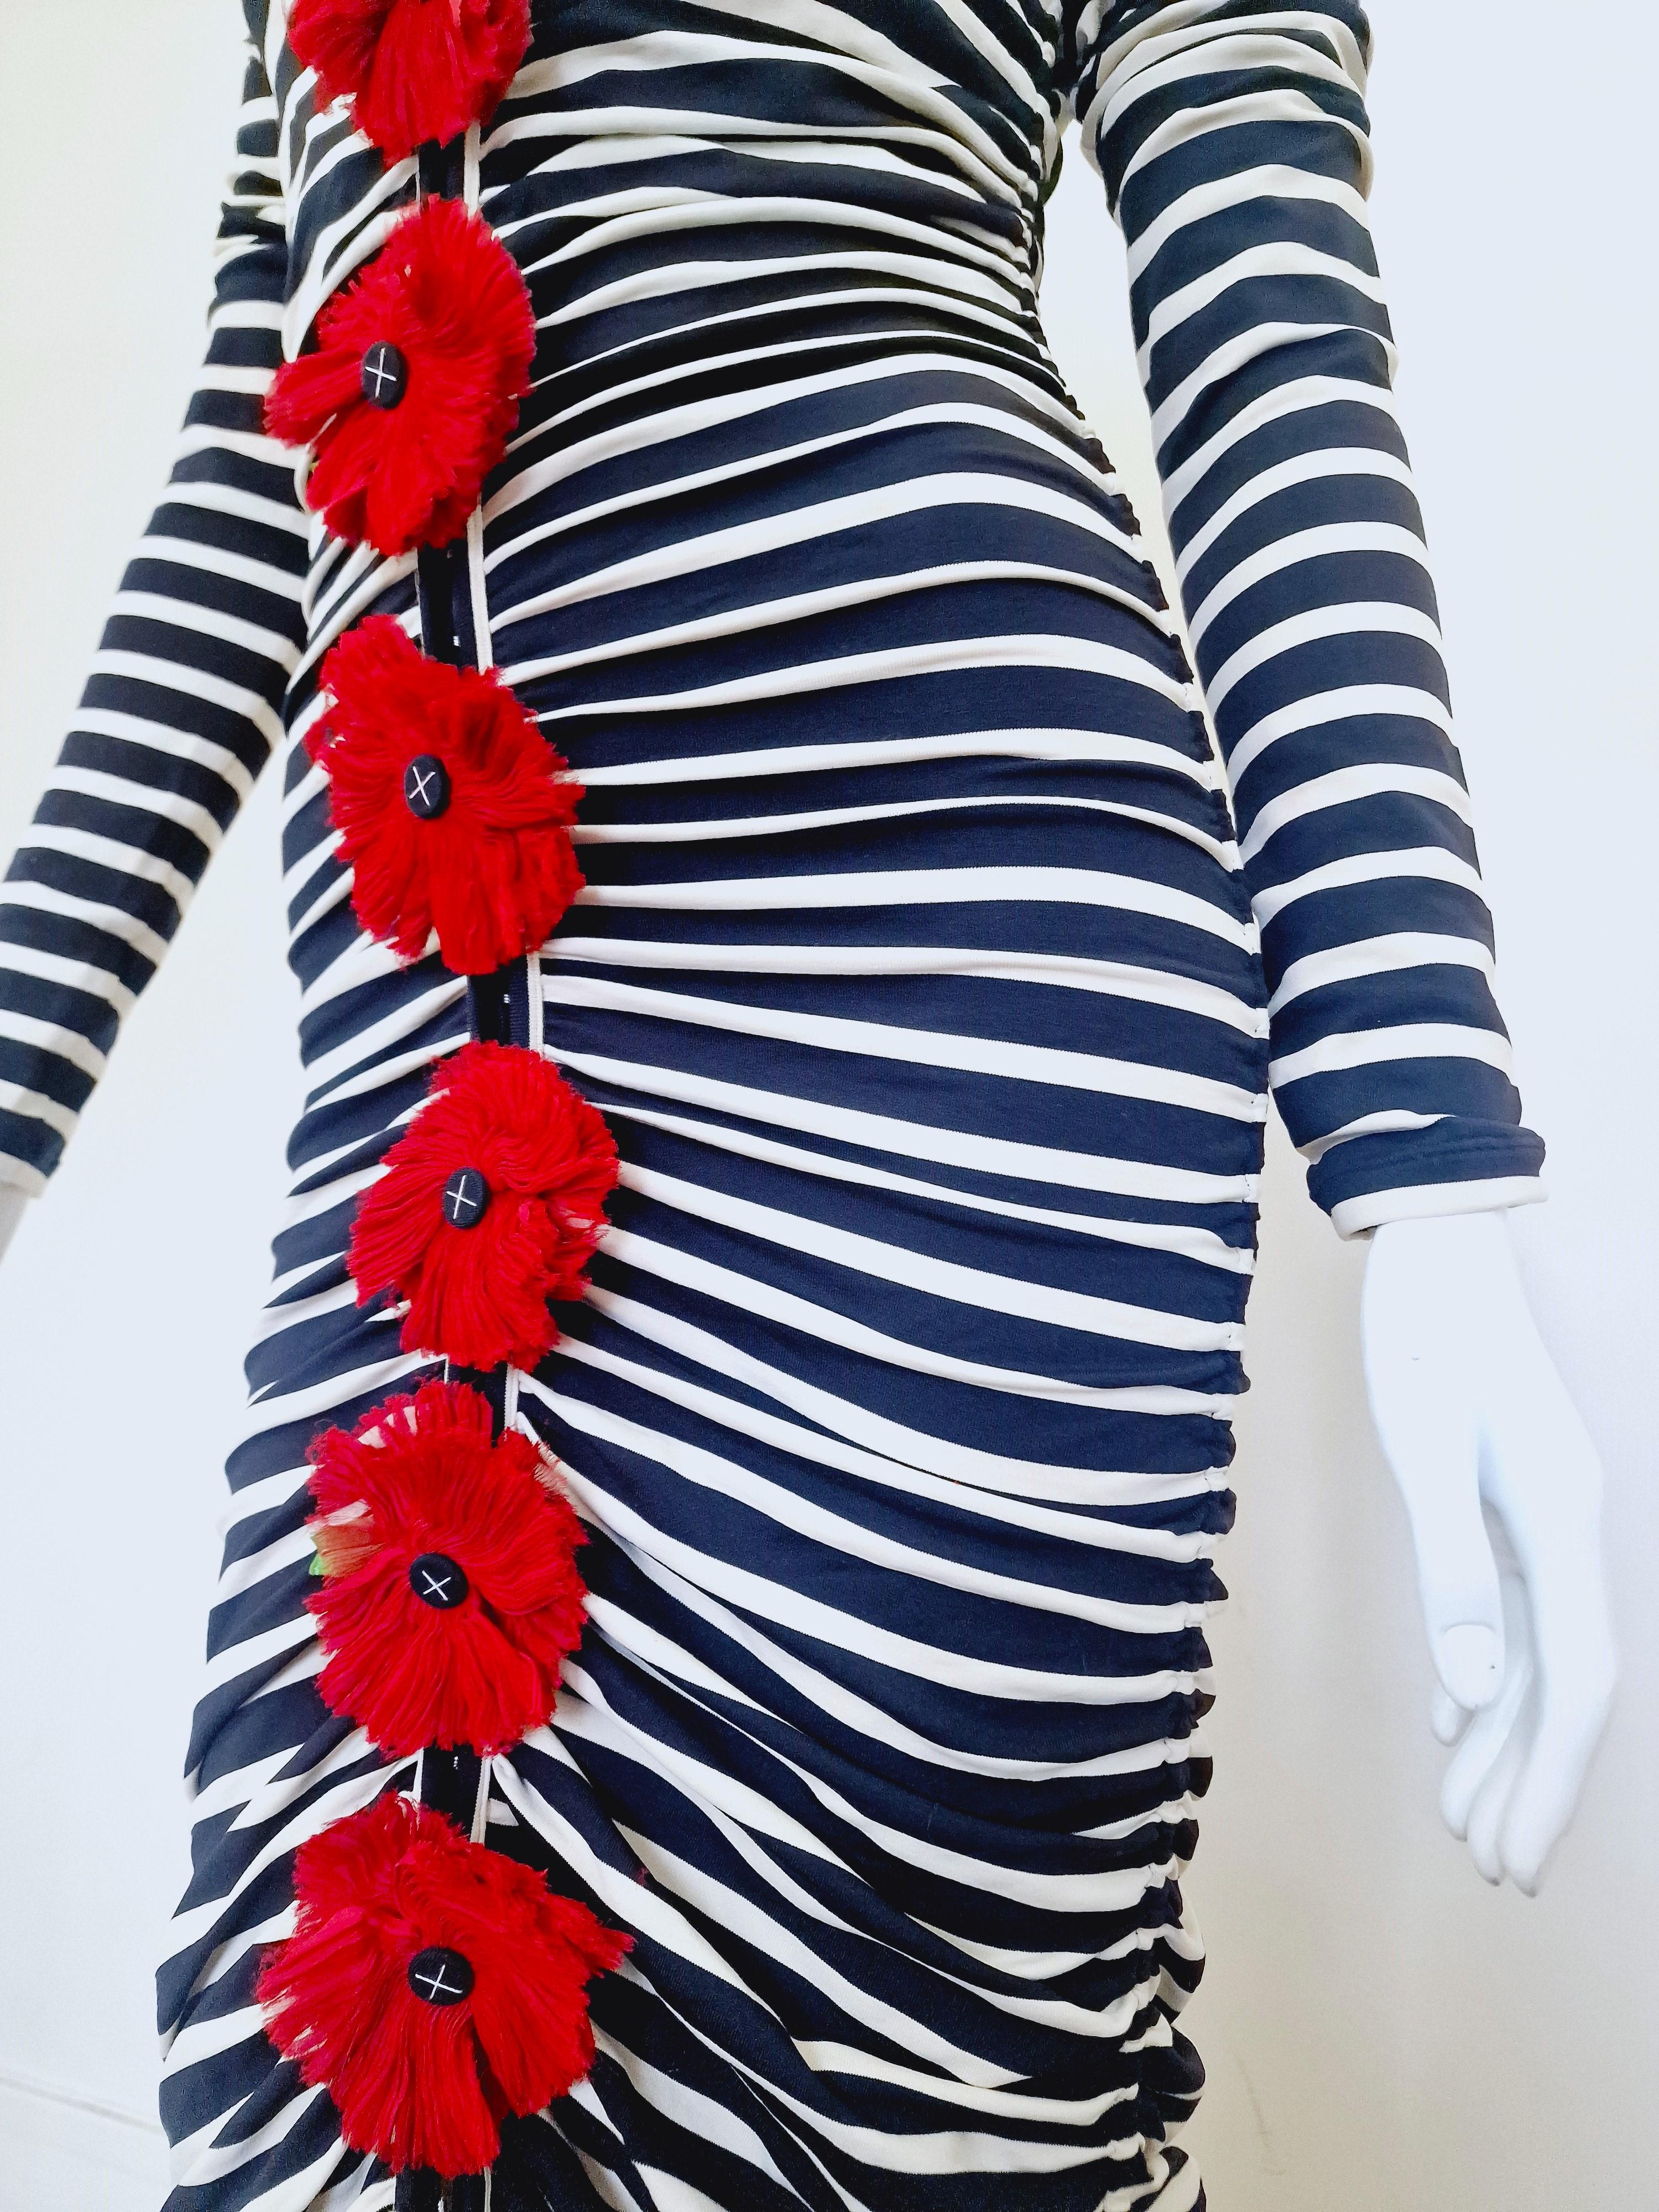 Jean Paul Gaultier Flower Corset Lace Up Open Front Floral Medium Small L Dress For Sale 3